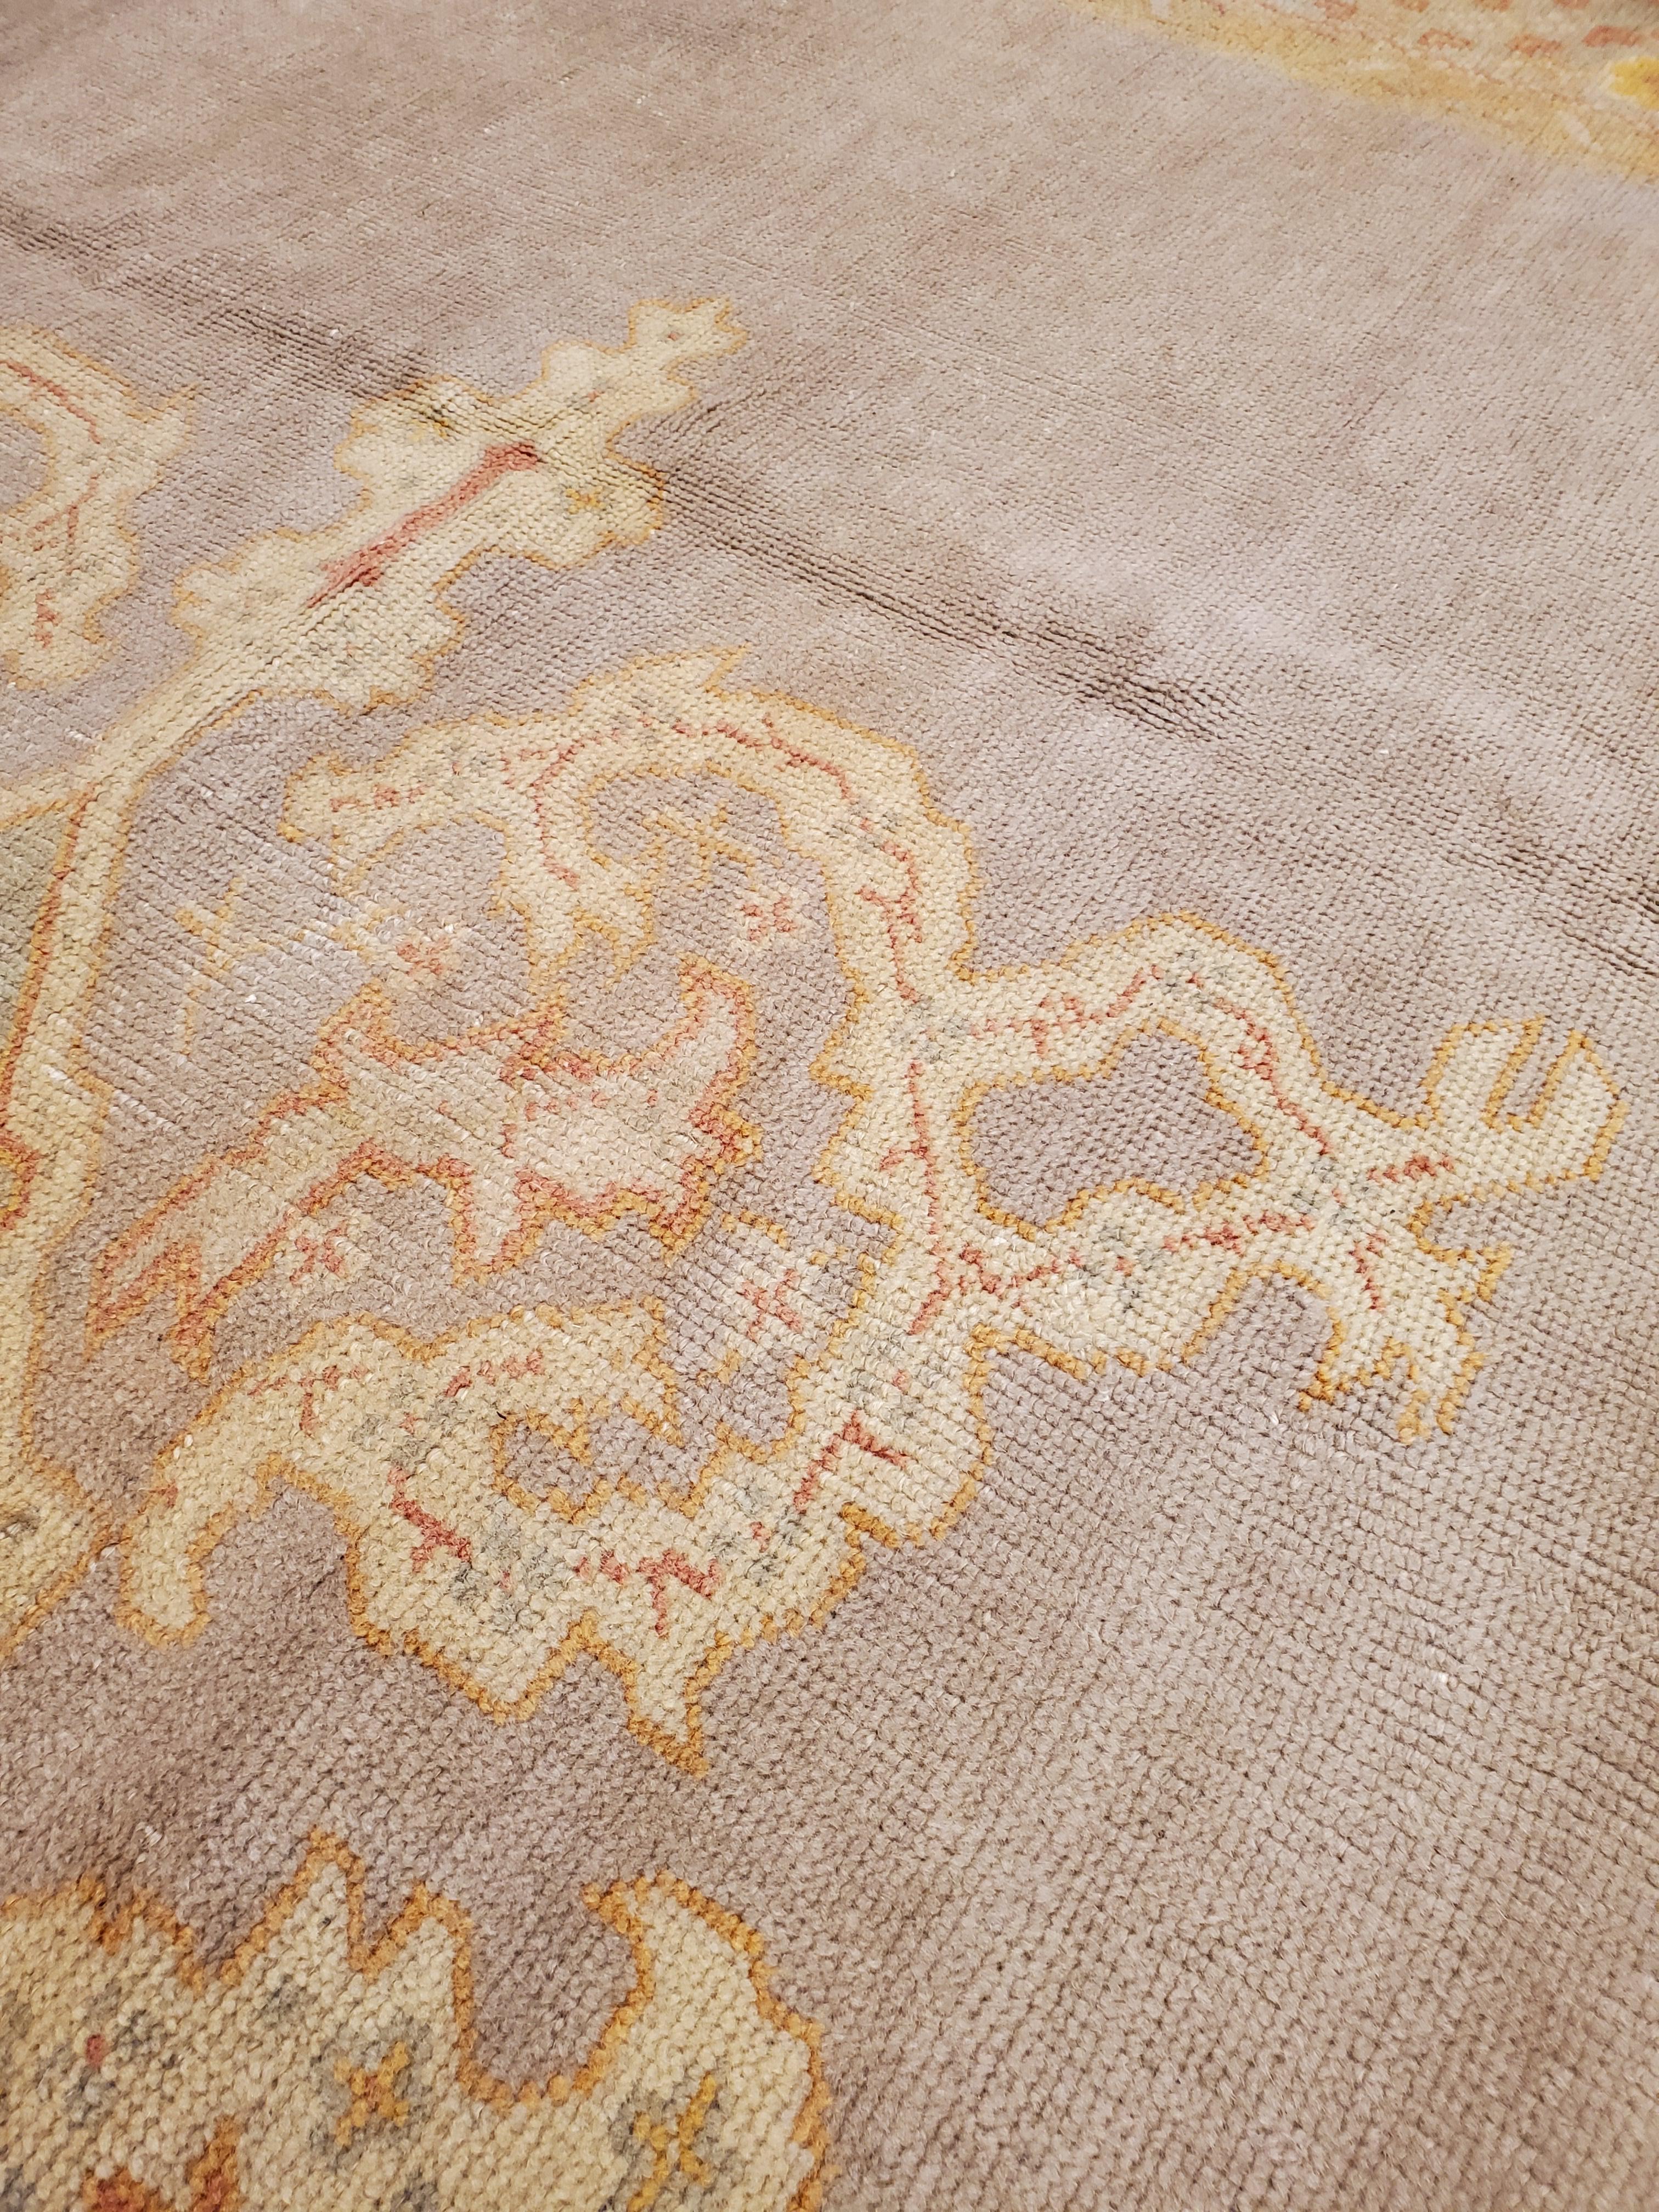 Antique Turkish Oushak Carpet, Handmade Oriental Rug, Gray, Taupe, Saffron Coral 3